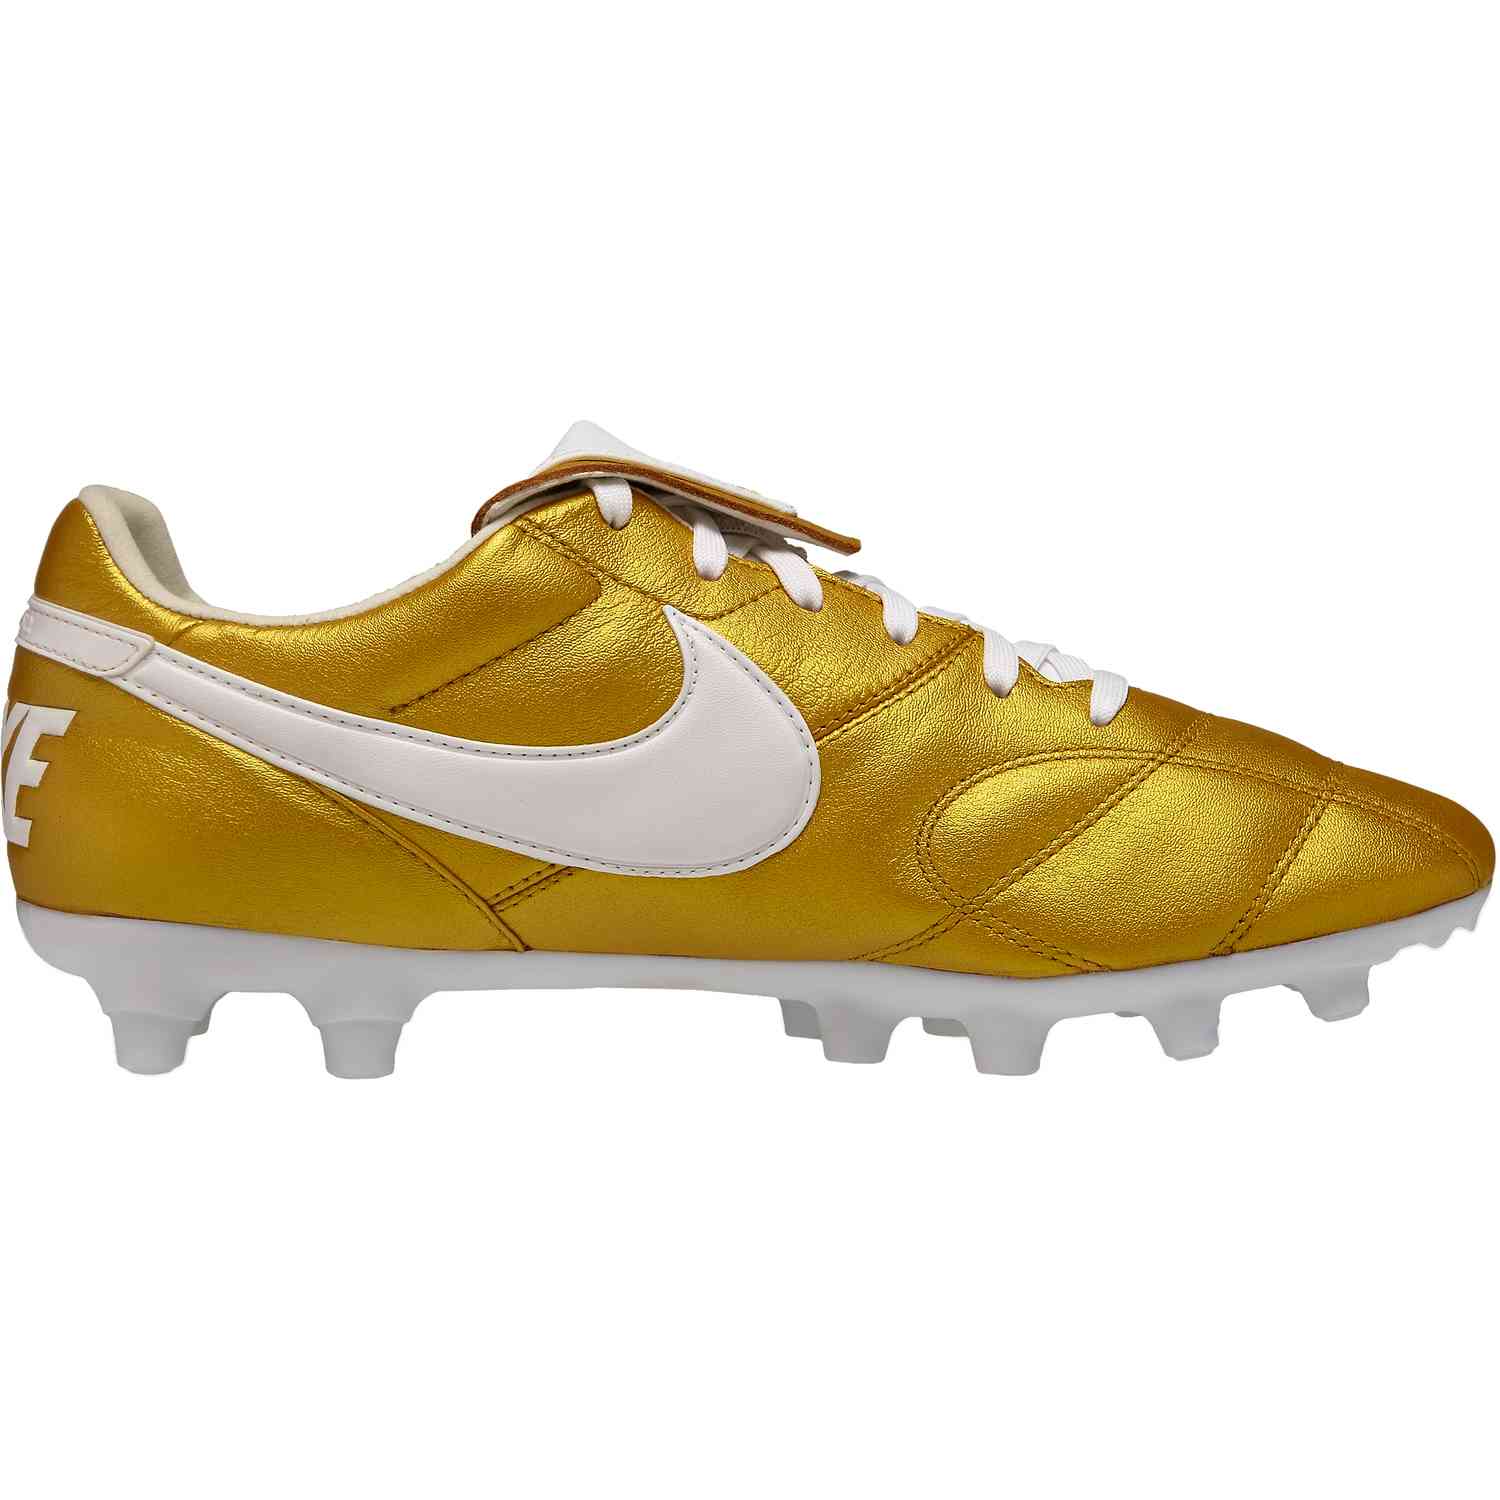 The Nike Premier II FG - Metallic Vivid Gold/White SoccerPro